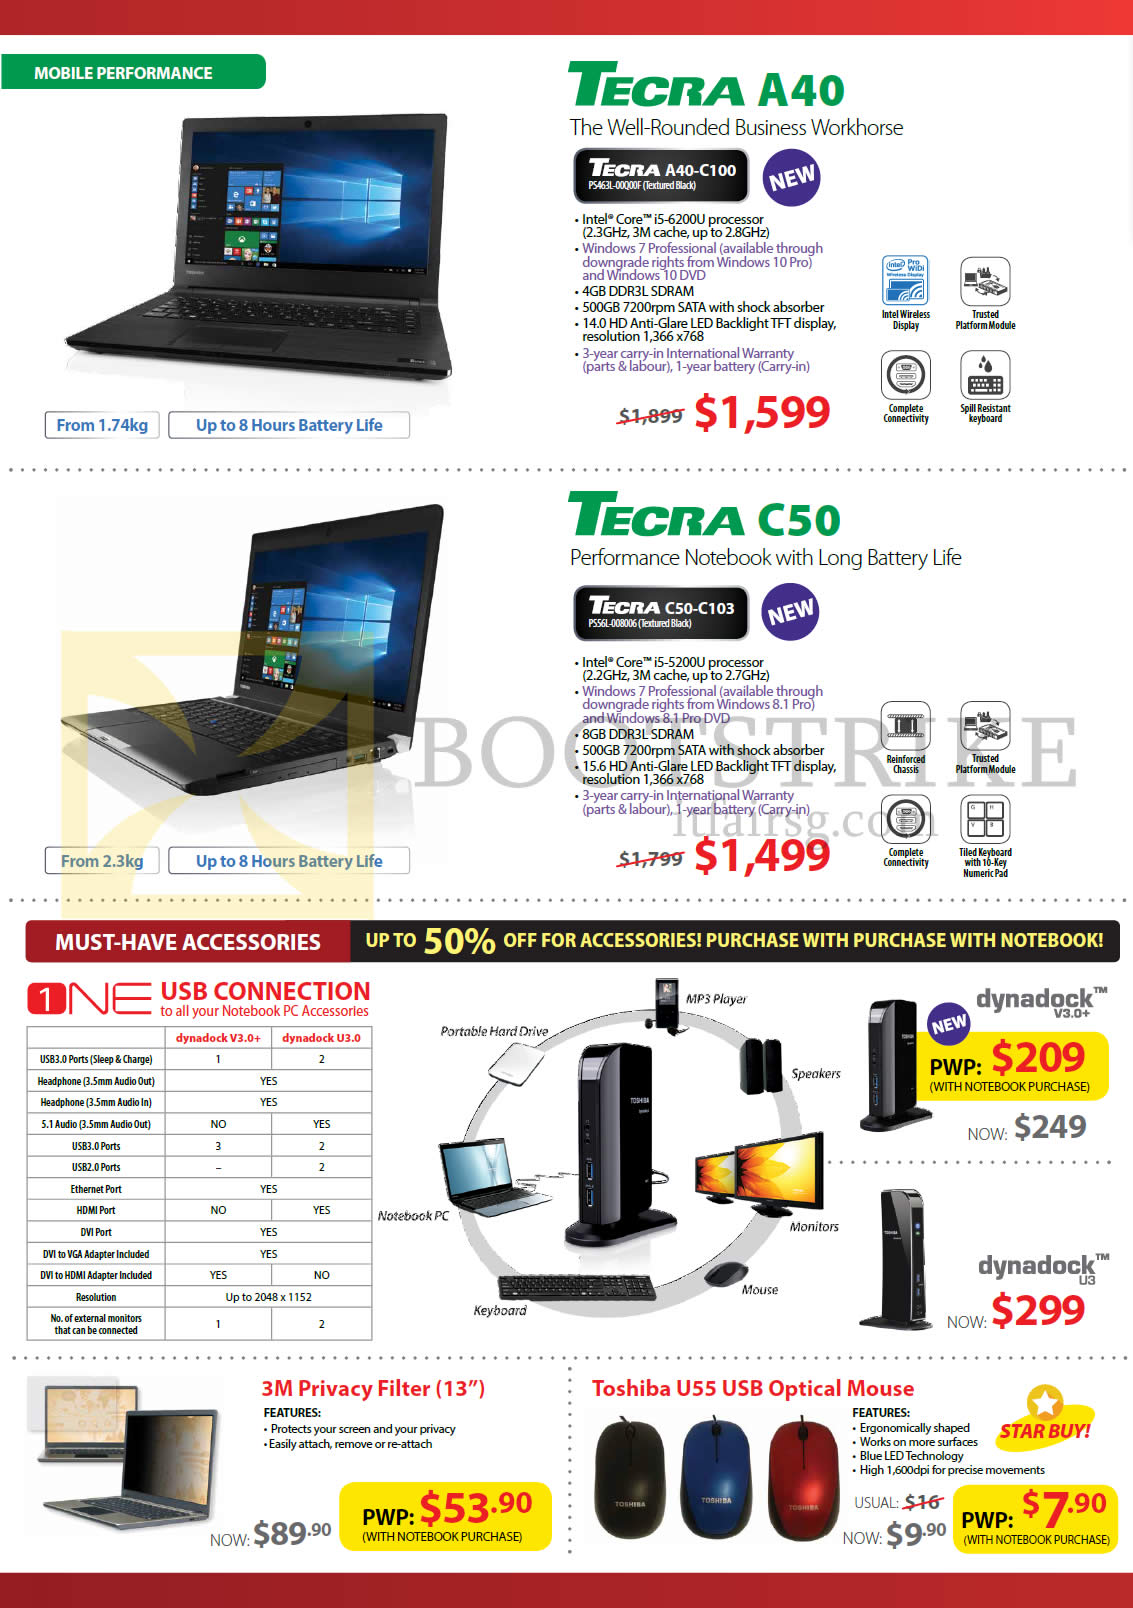 PC SHOW 2016 price list image brochure of Toshiba Notebooks Tecra A40-C100, C50-C103, Dynadock V3.0Plus, U3, 3M Privacy Filter, U55 USB Optical Mouse